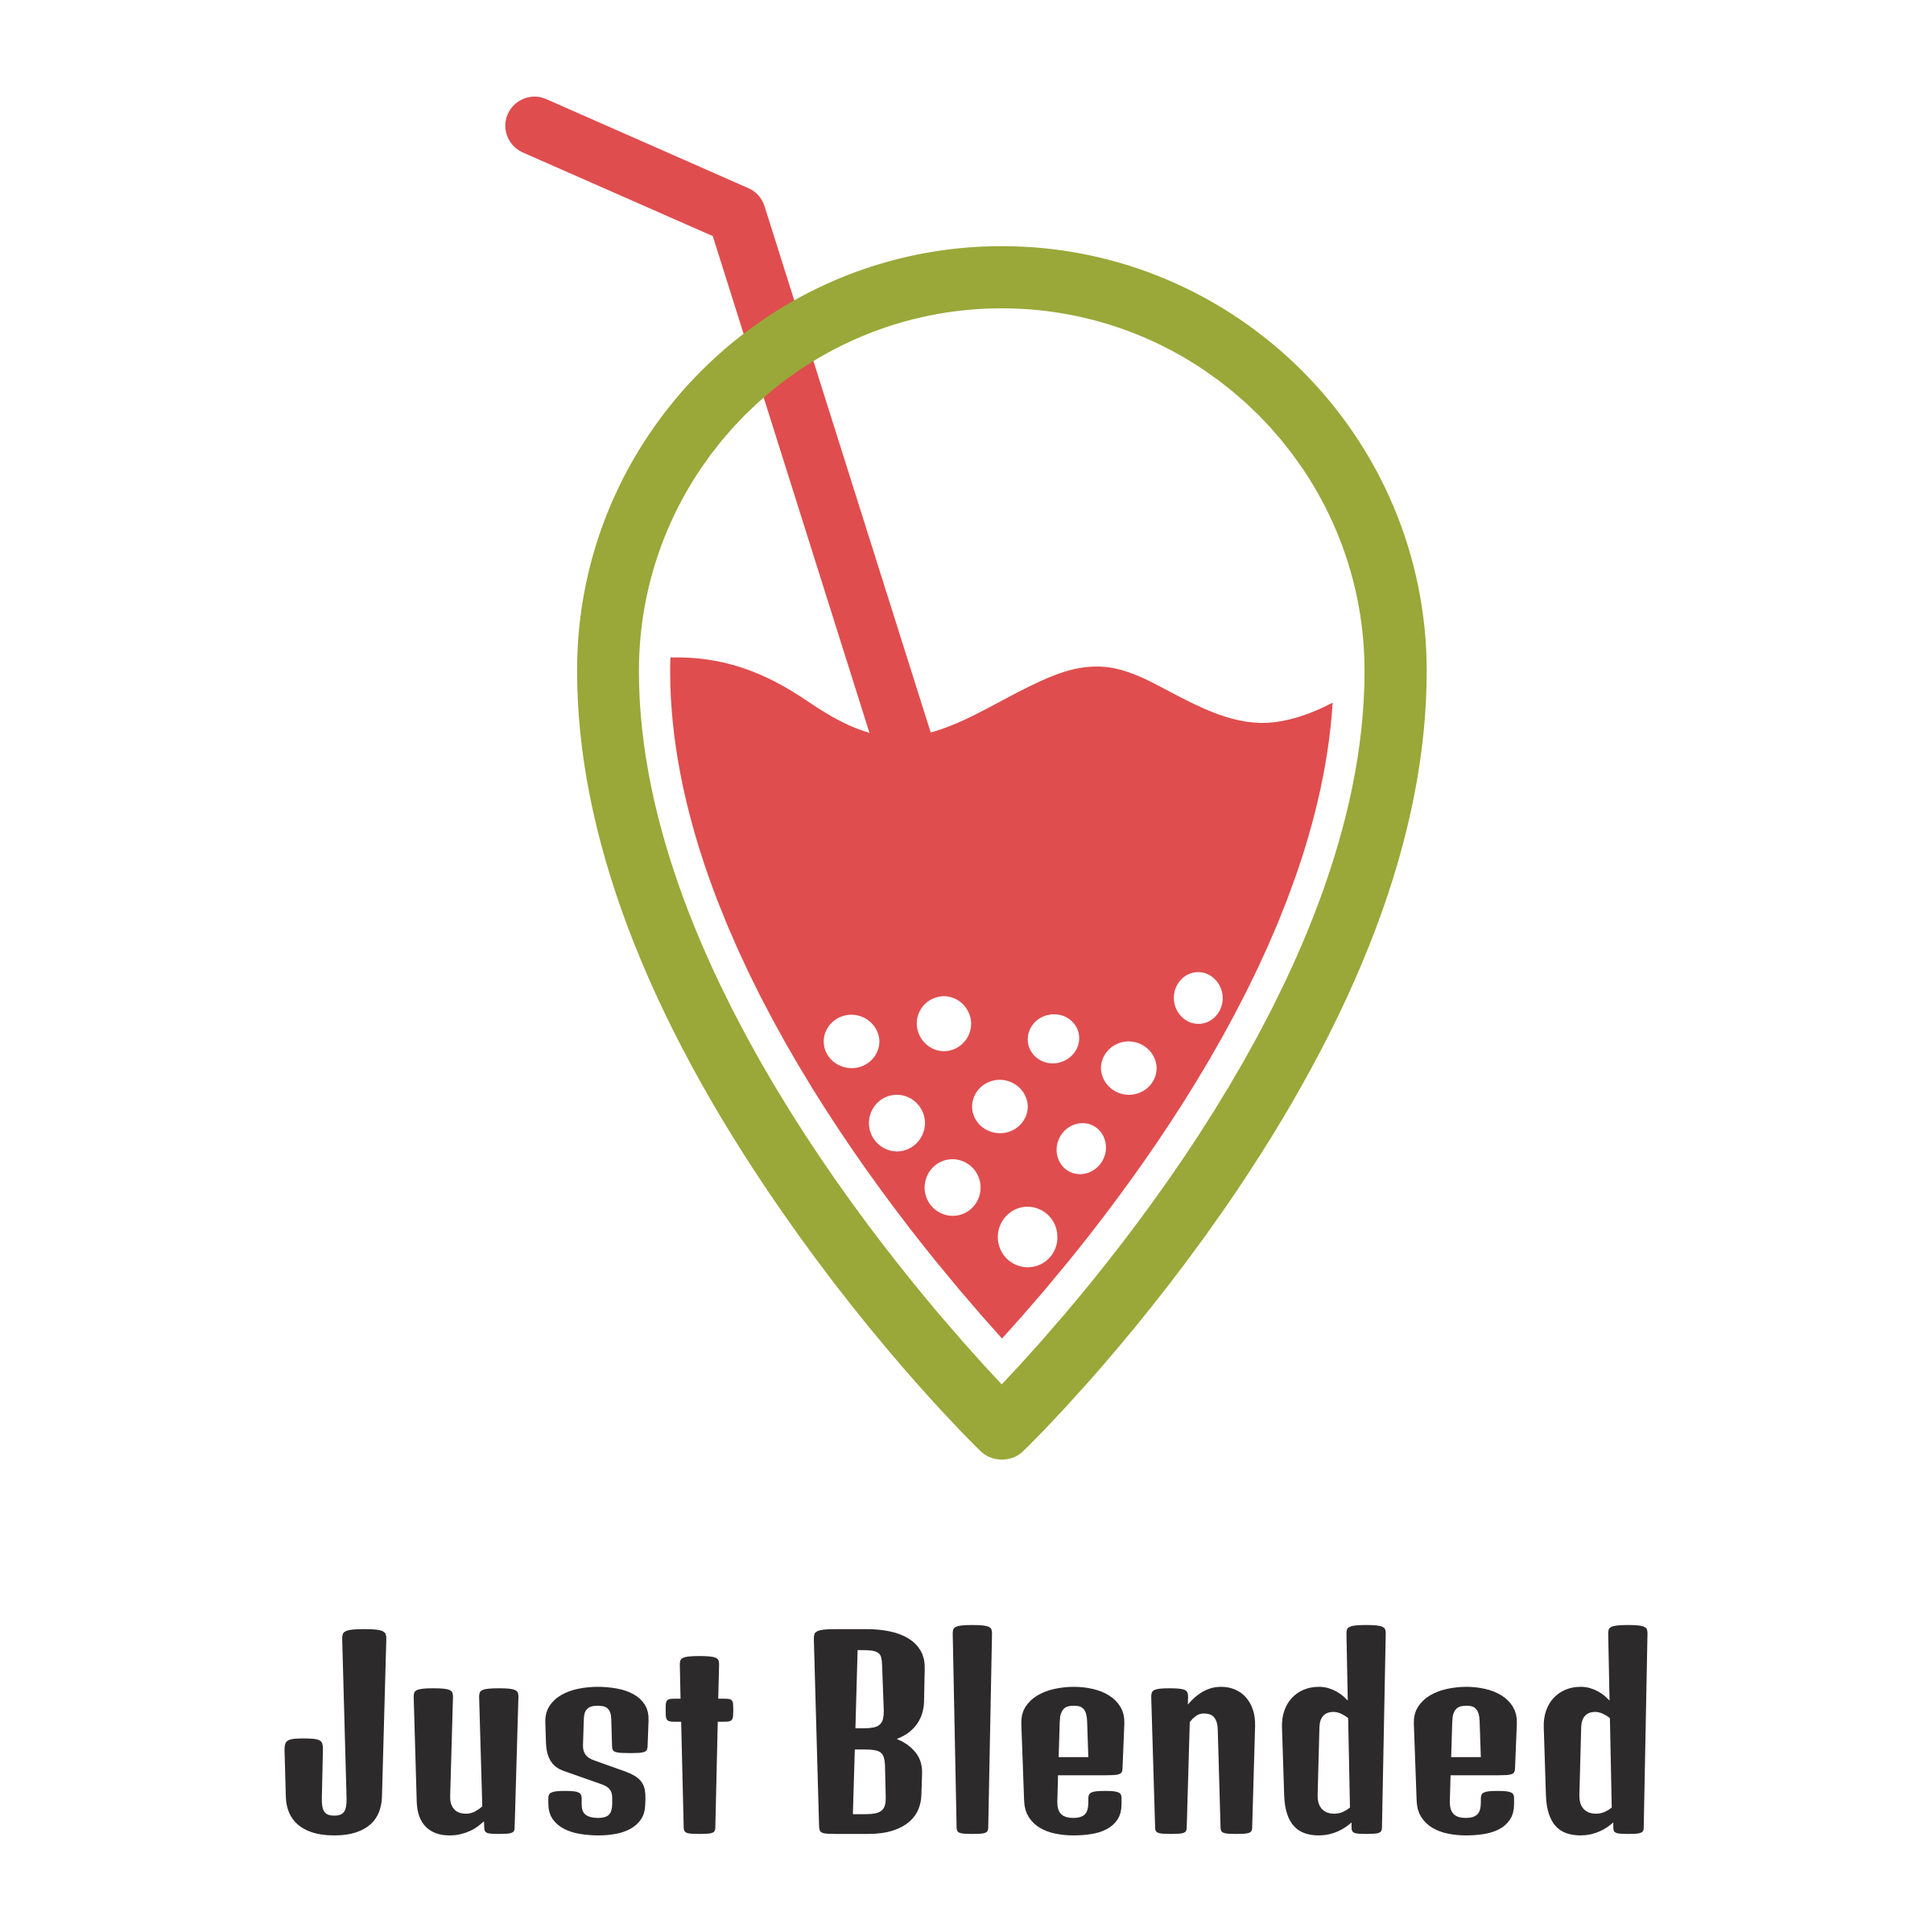 Fresh fruits juice shop logo design Royalty Free Vector